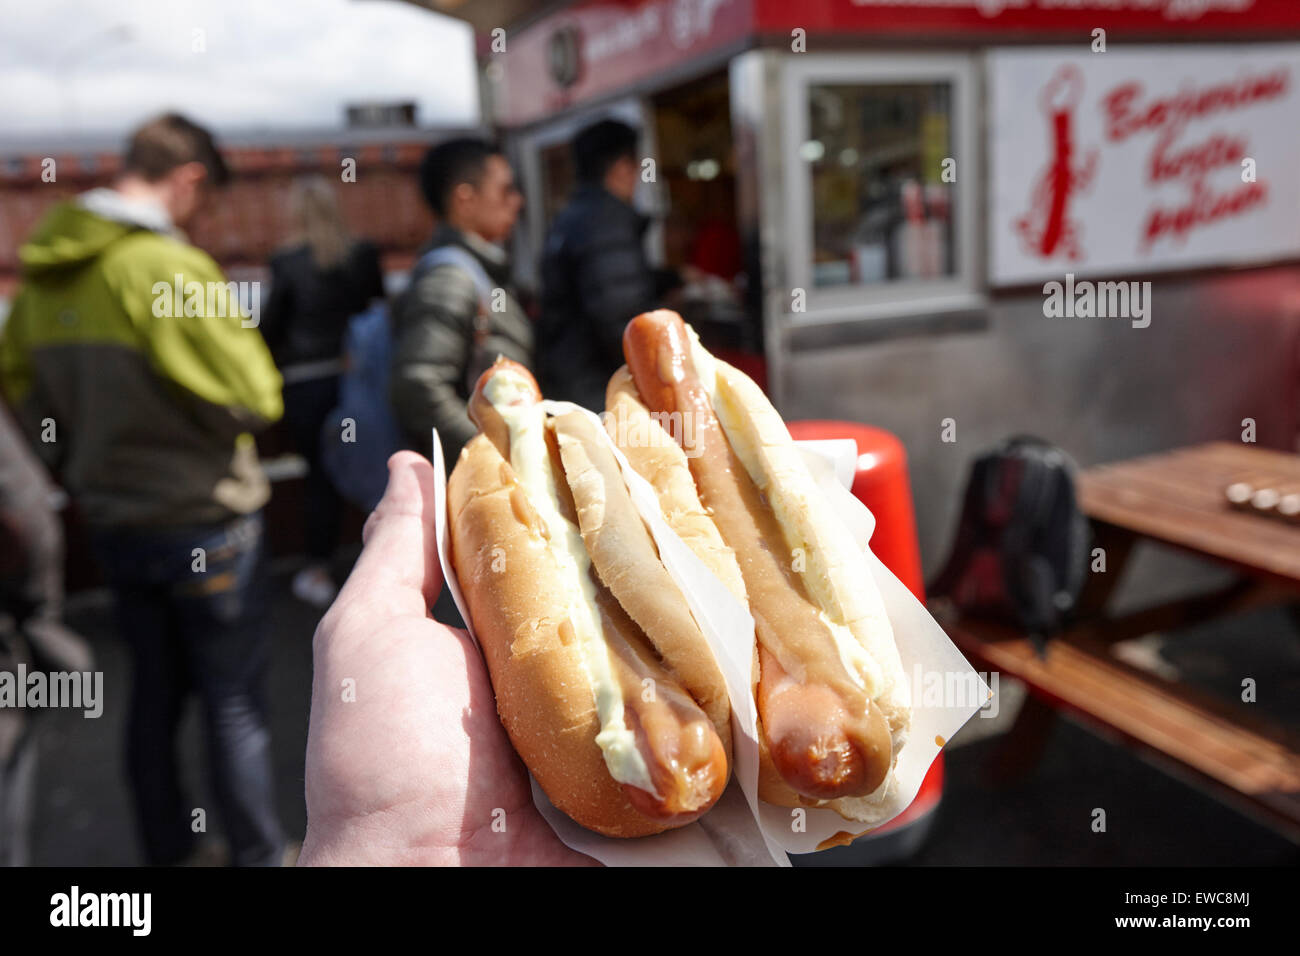 Hotdogs aus Bbp Islendingar Borda ss Pylsur Volke besten Hot-Dog stand Reykjavik Island Stockfoto